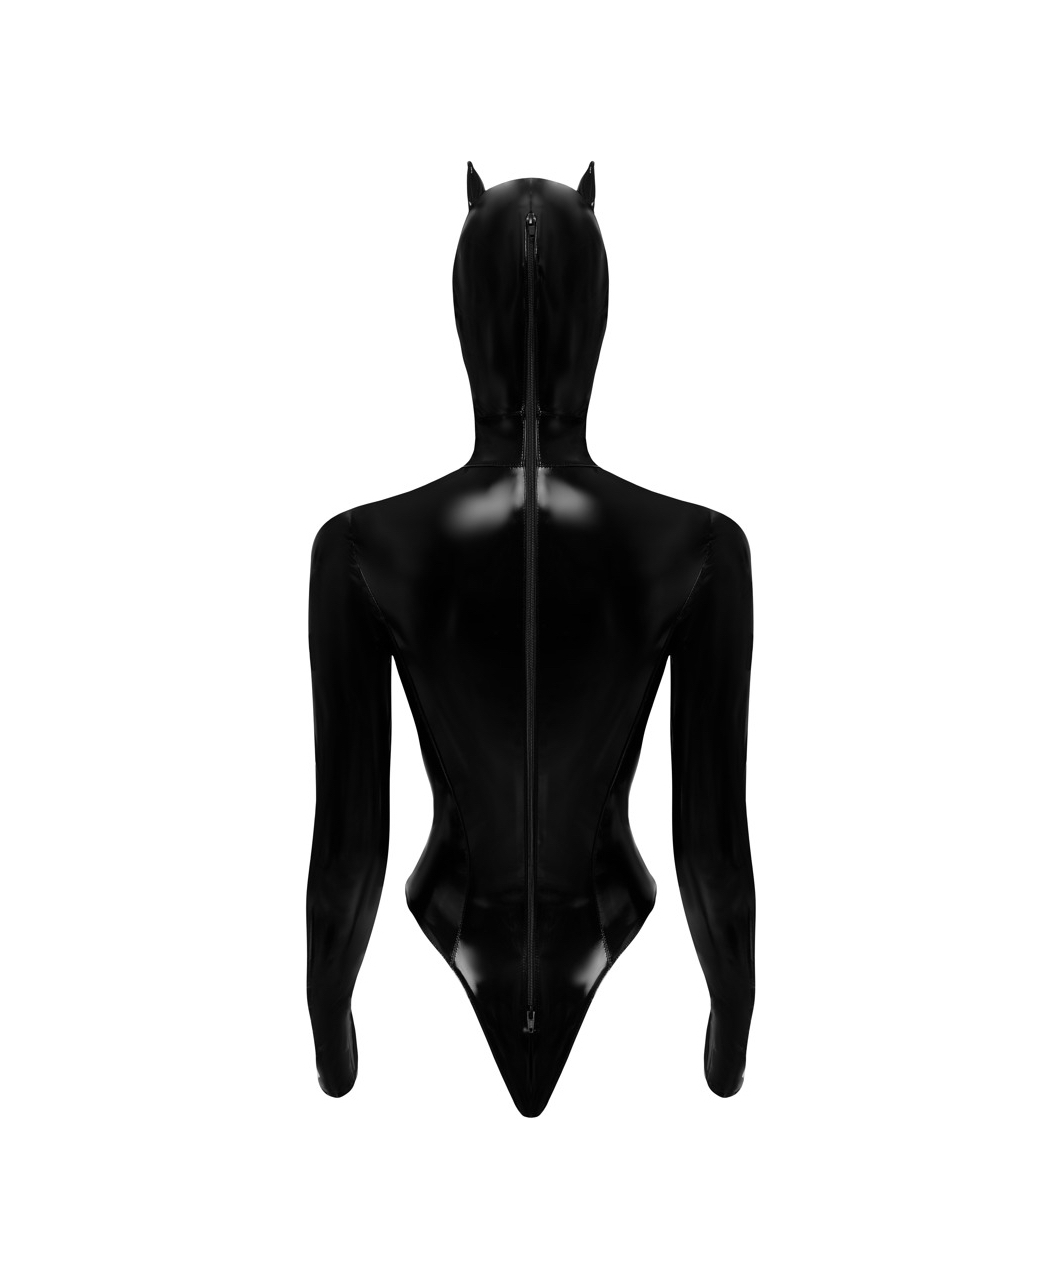 Black Level black vinyl bodysuit with cat hood mask